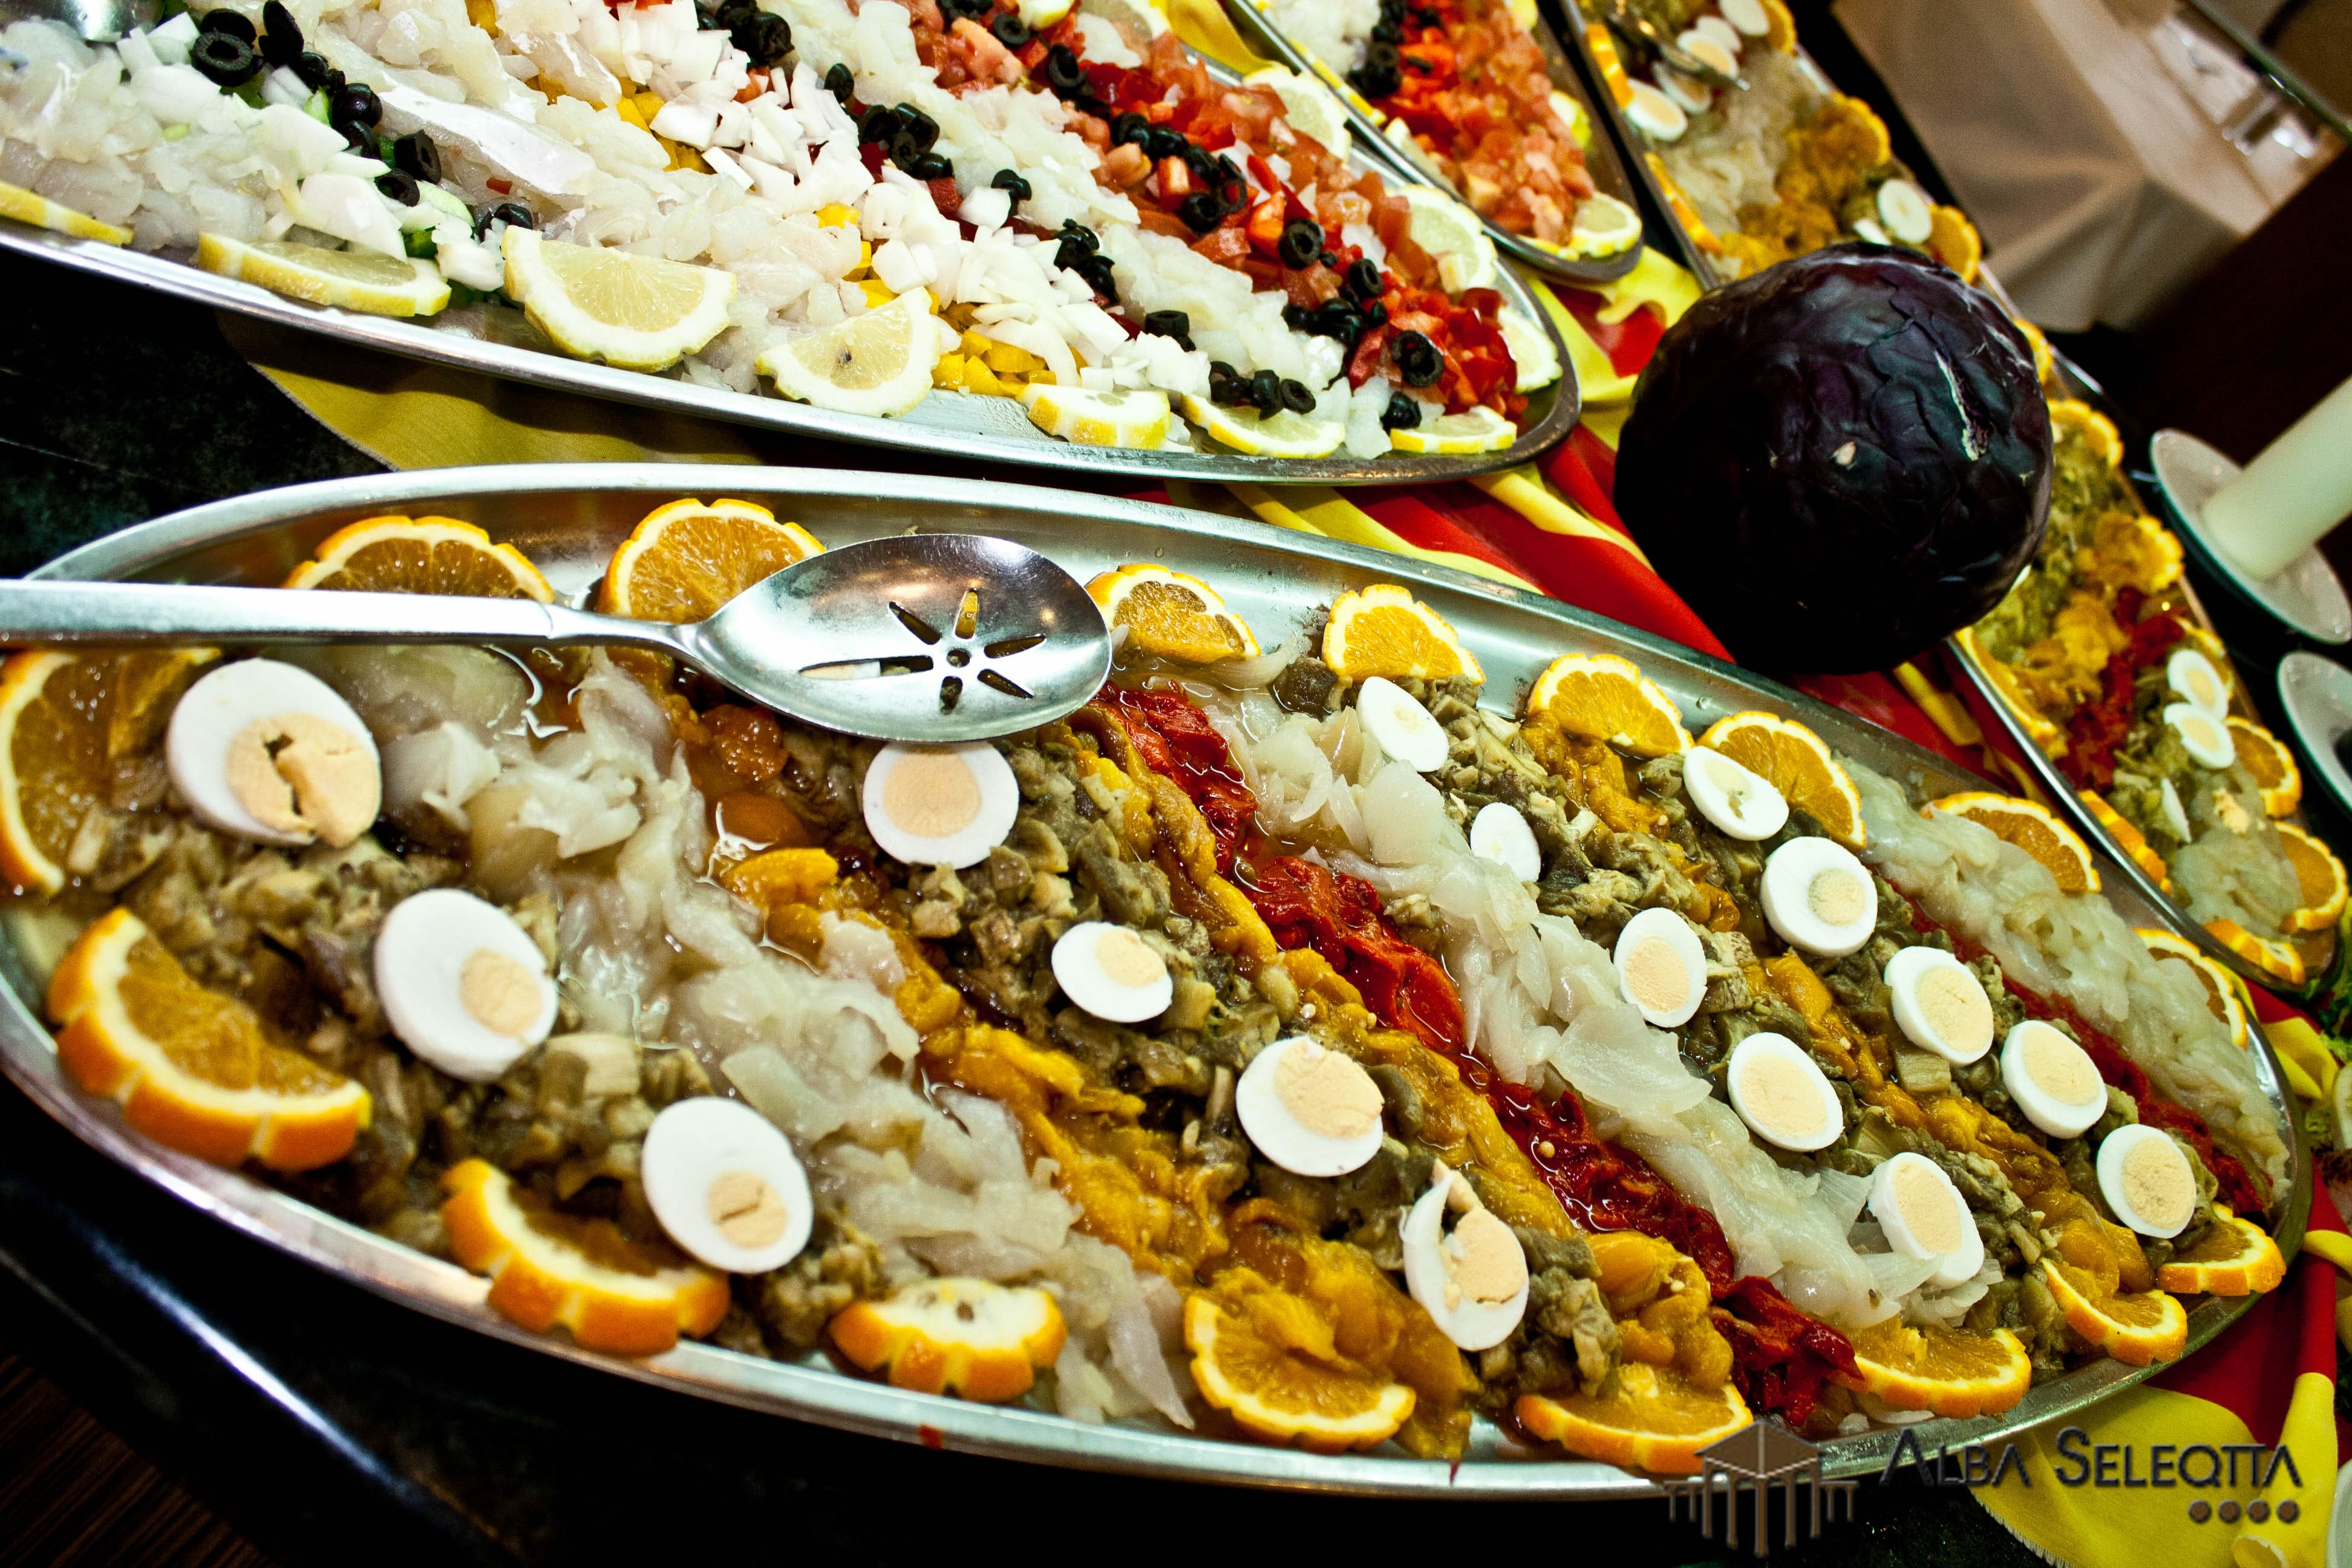 ensaladas-restaurante-buffet-alba-seleqtta-lloret-de-mar-girona.jpg